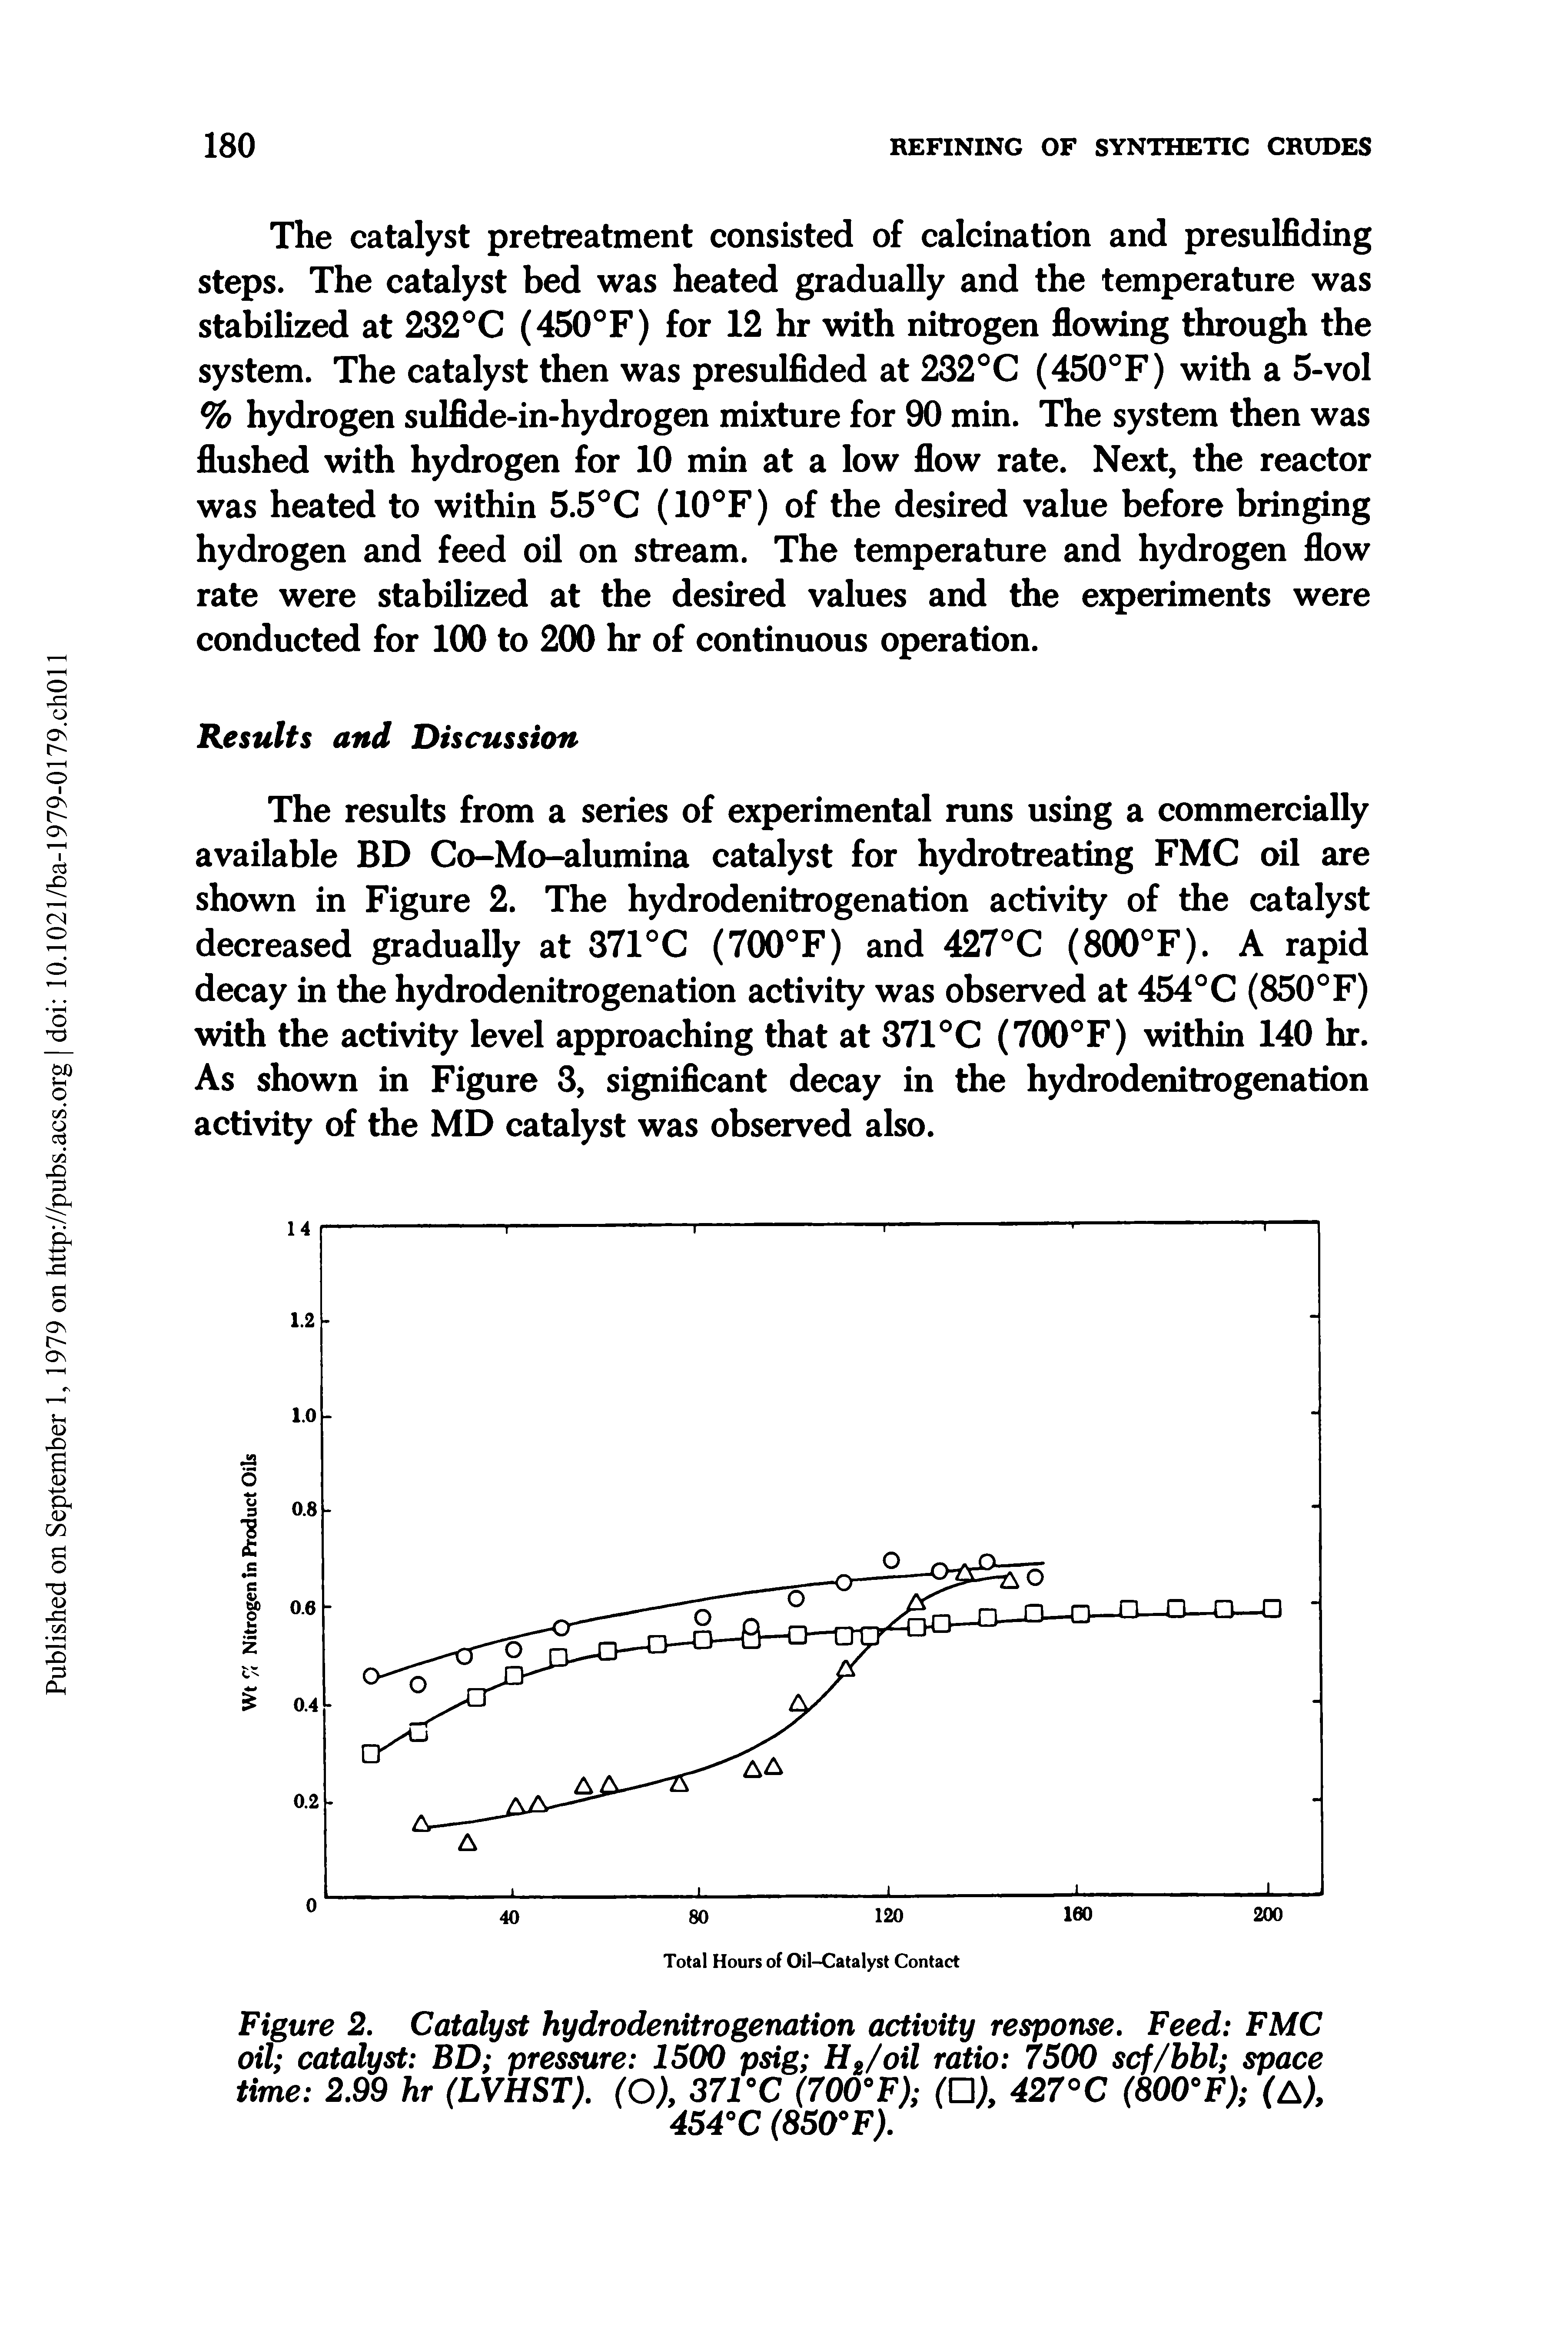 Figure 2. Catalyst hydrodenitrogenation activity response. Feed FMC oil catalyst BD pressure 1500 psig H2/oil ratio 7500 scf/bbl space time 2.99 hr (LVHST). (O), 371°C (700°F) (U), 427°C (800°F) (A),...